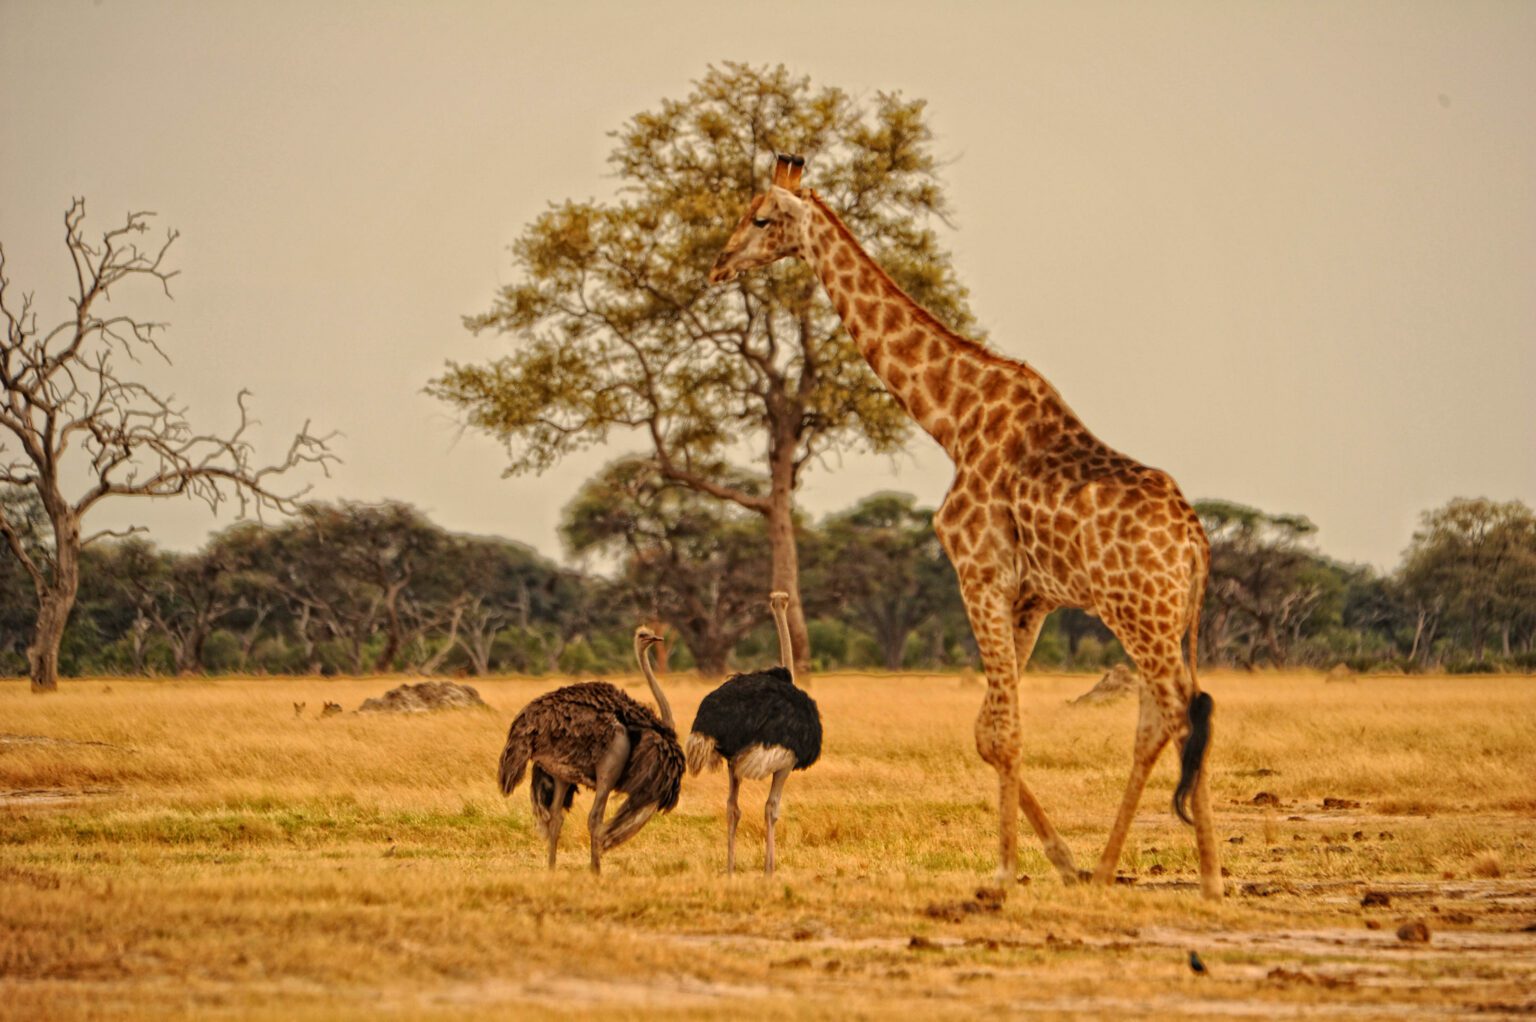 Giraffe grazing on a tree in Hwange national park